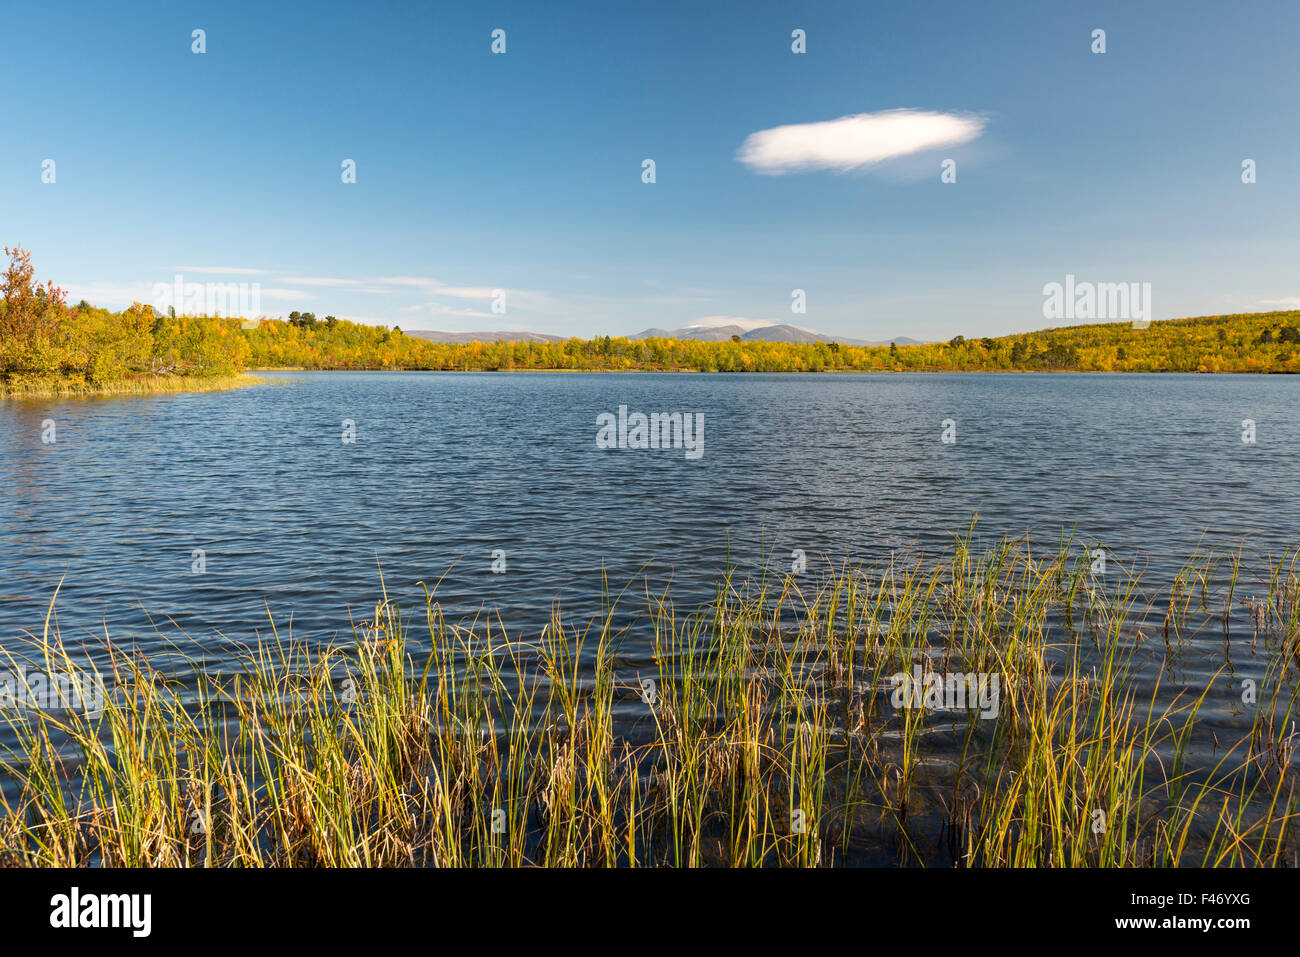 Vuolio Njáhkájávri lake, Abisko National Park, Norrbotten, Lapland, Sweden Banque D'Images